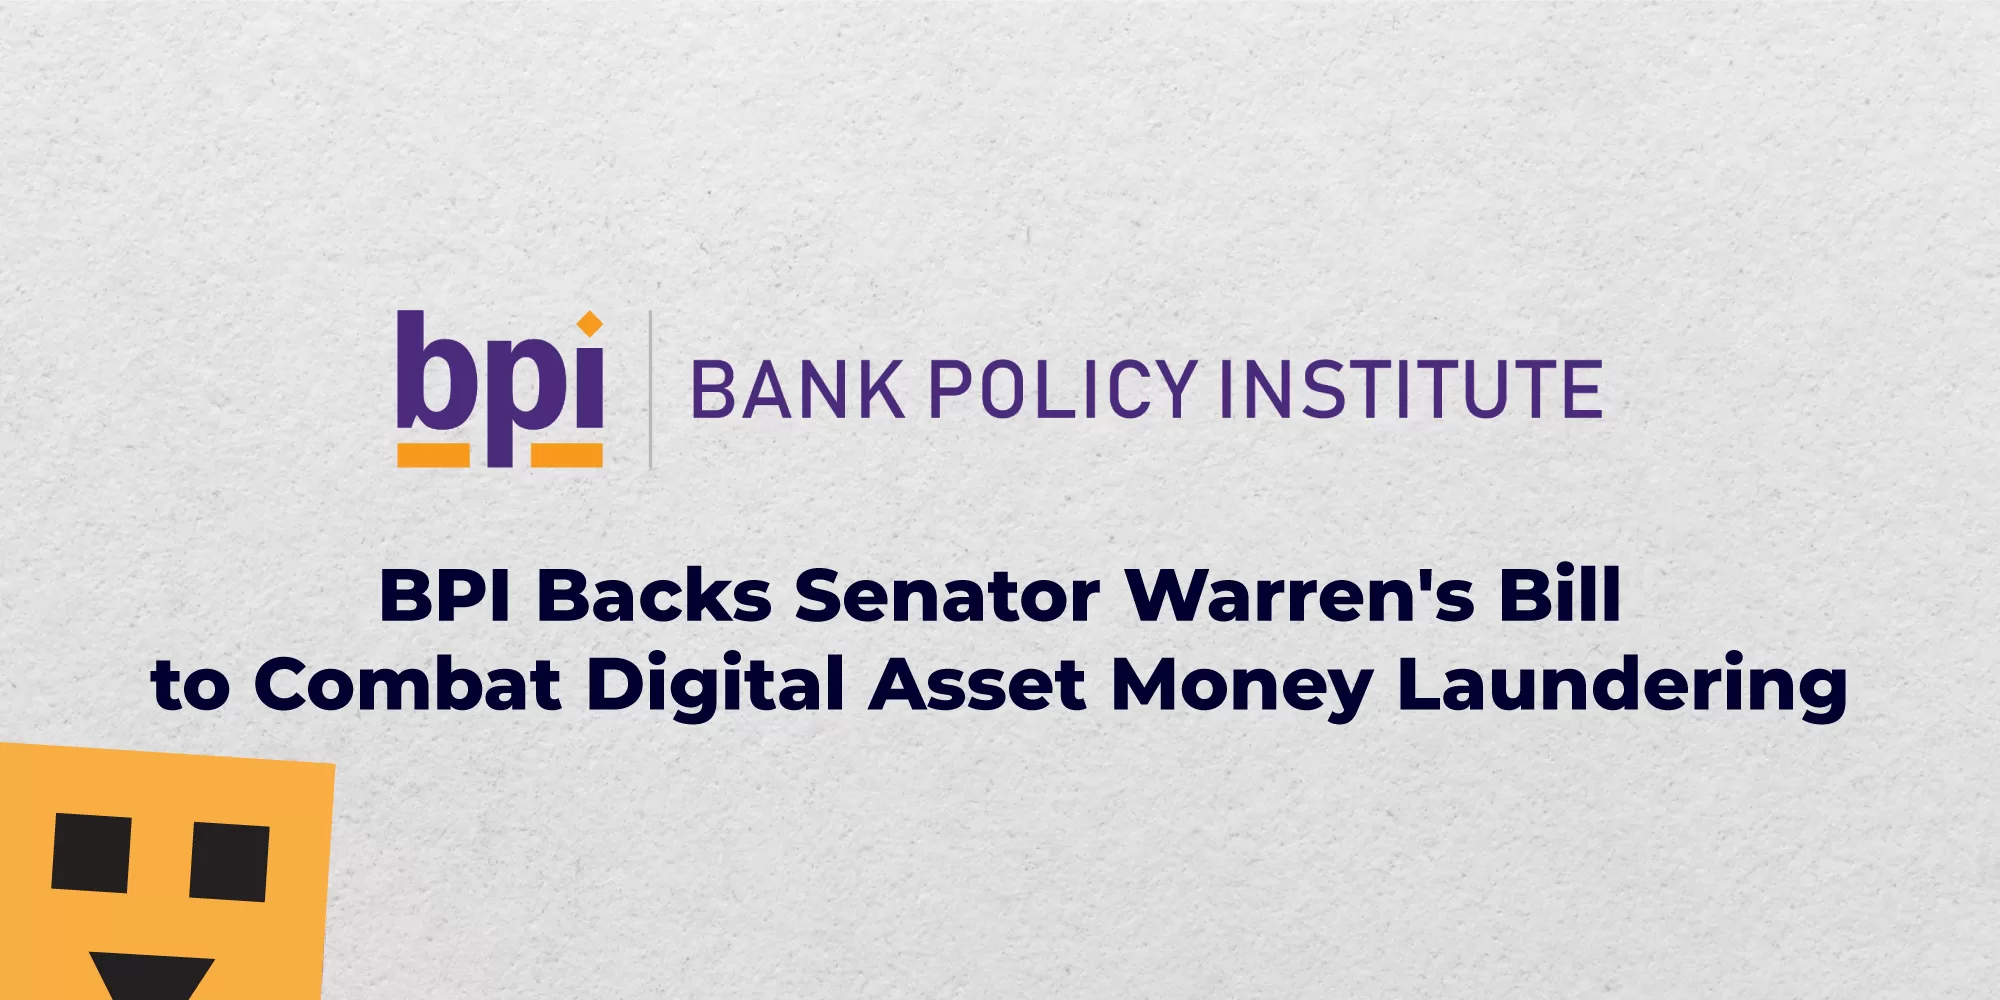 BPI Backs Senator Warren's Bill to Combat Digital Asset Money Laundering